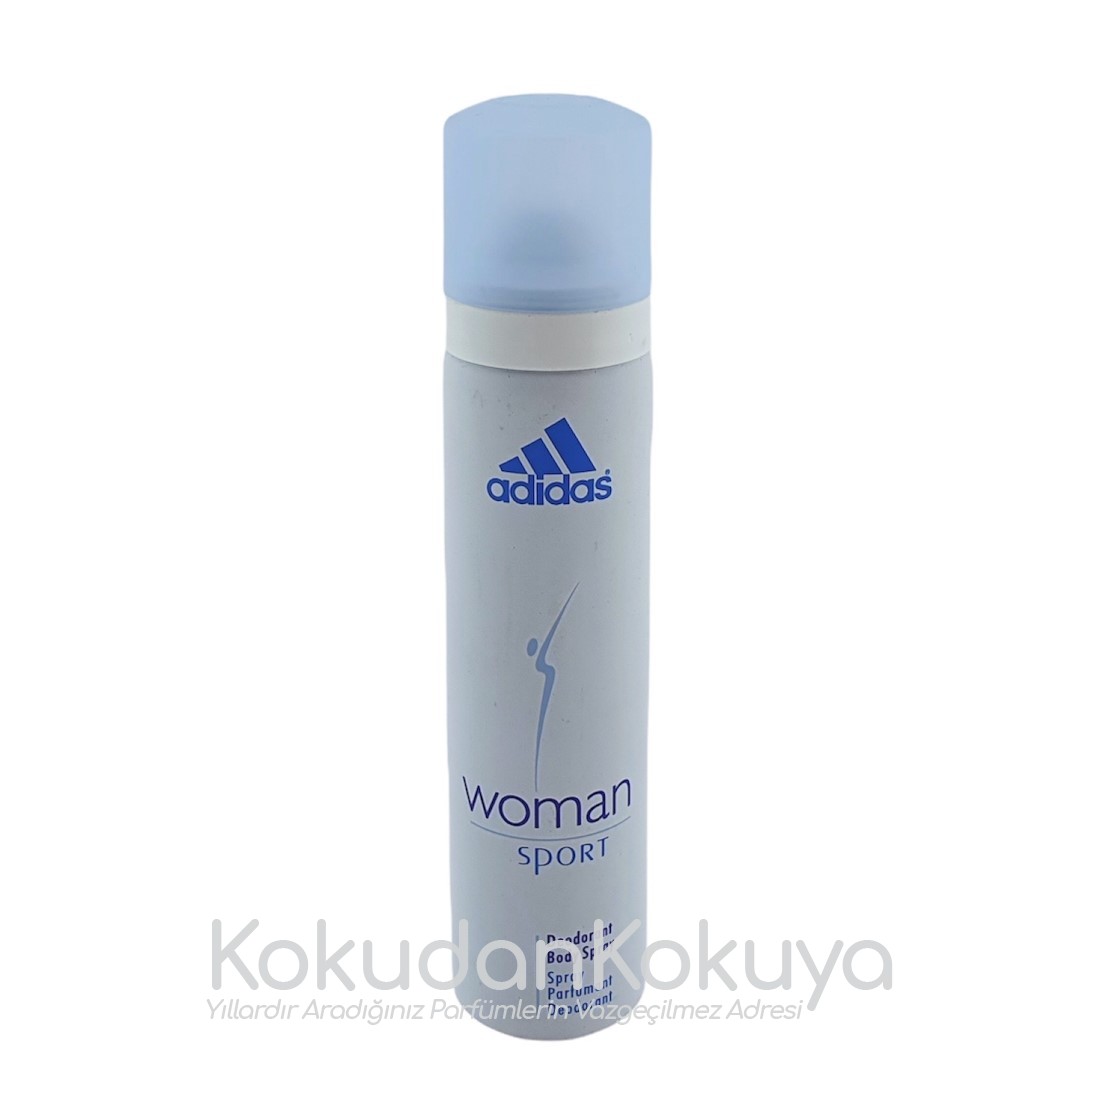 ADIDAS Woman Sport Deodorant Kadın 75ml Deodorant Spray (Metal) 